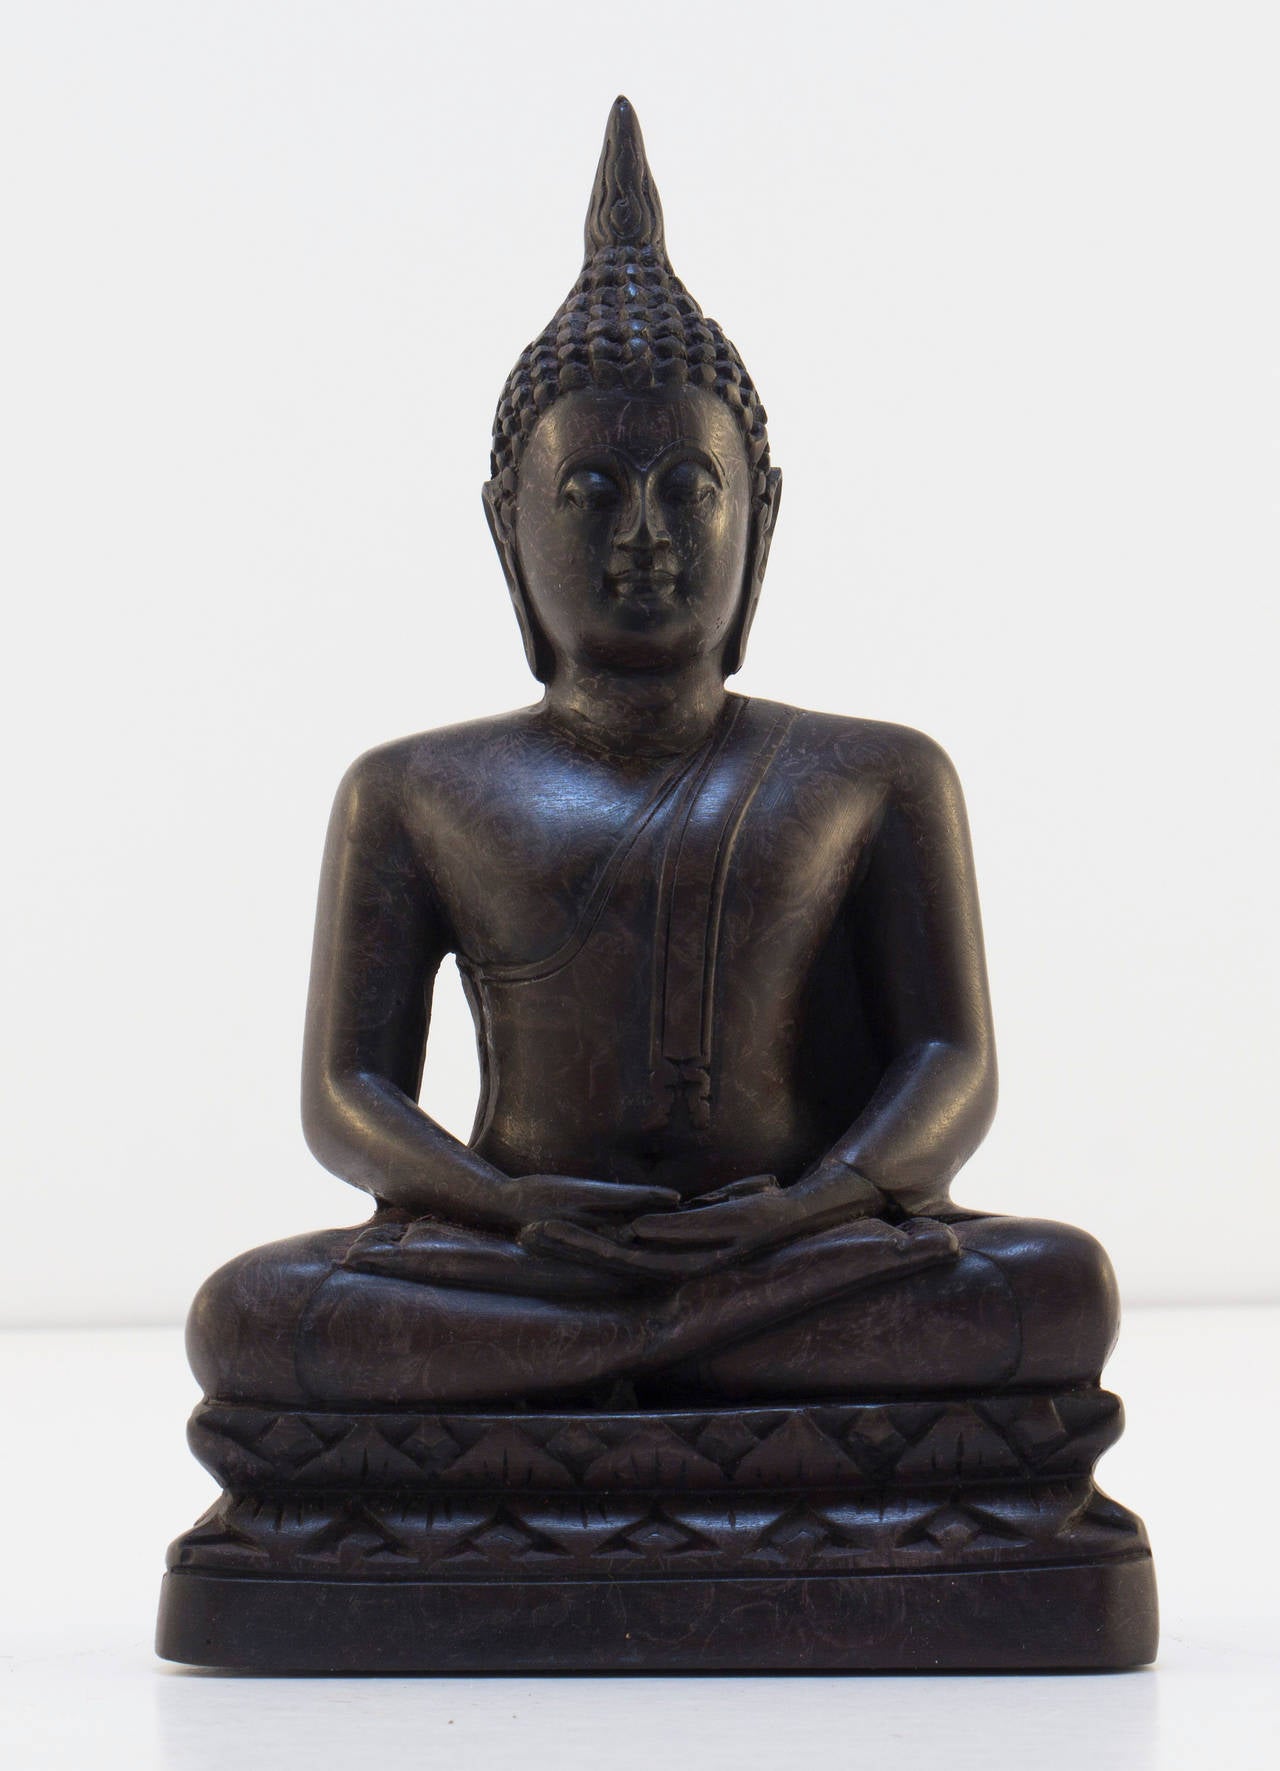 19th Century ebony Buddha statue from Thailand